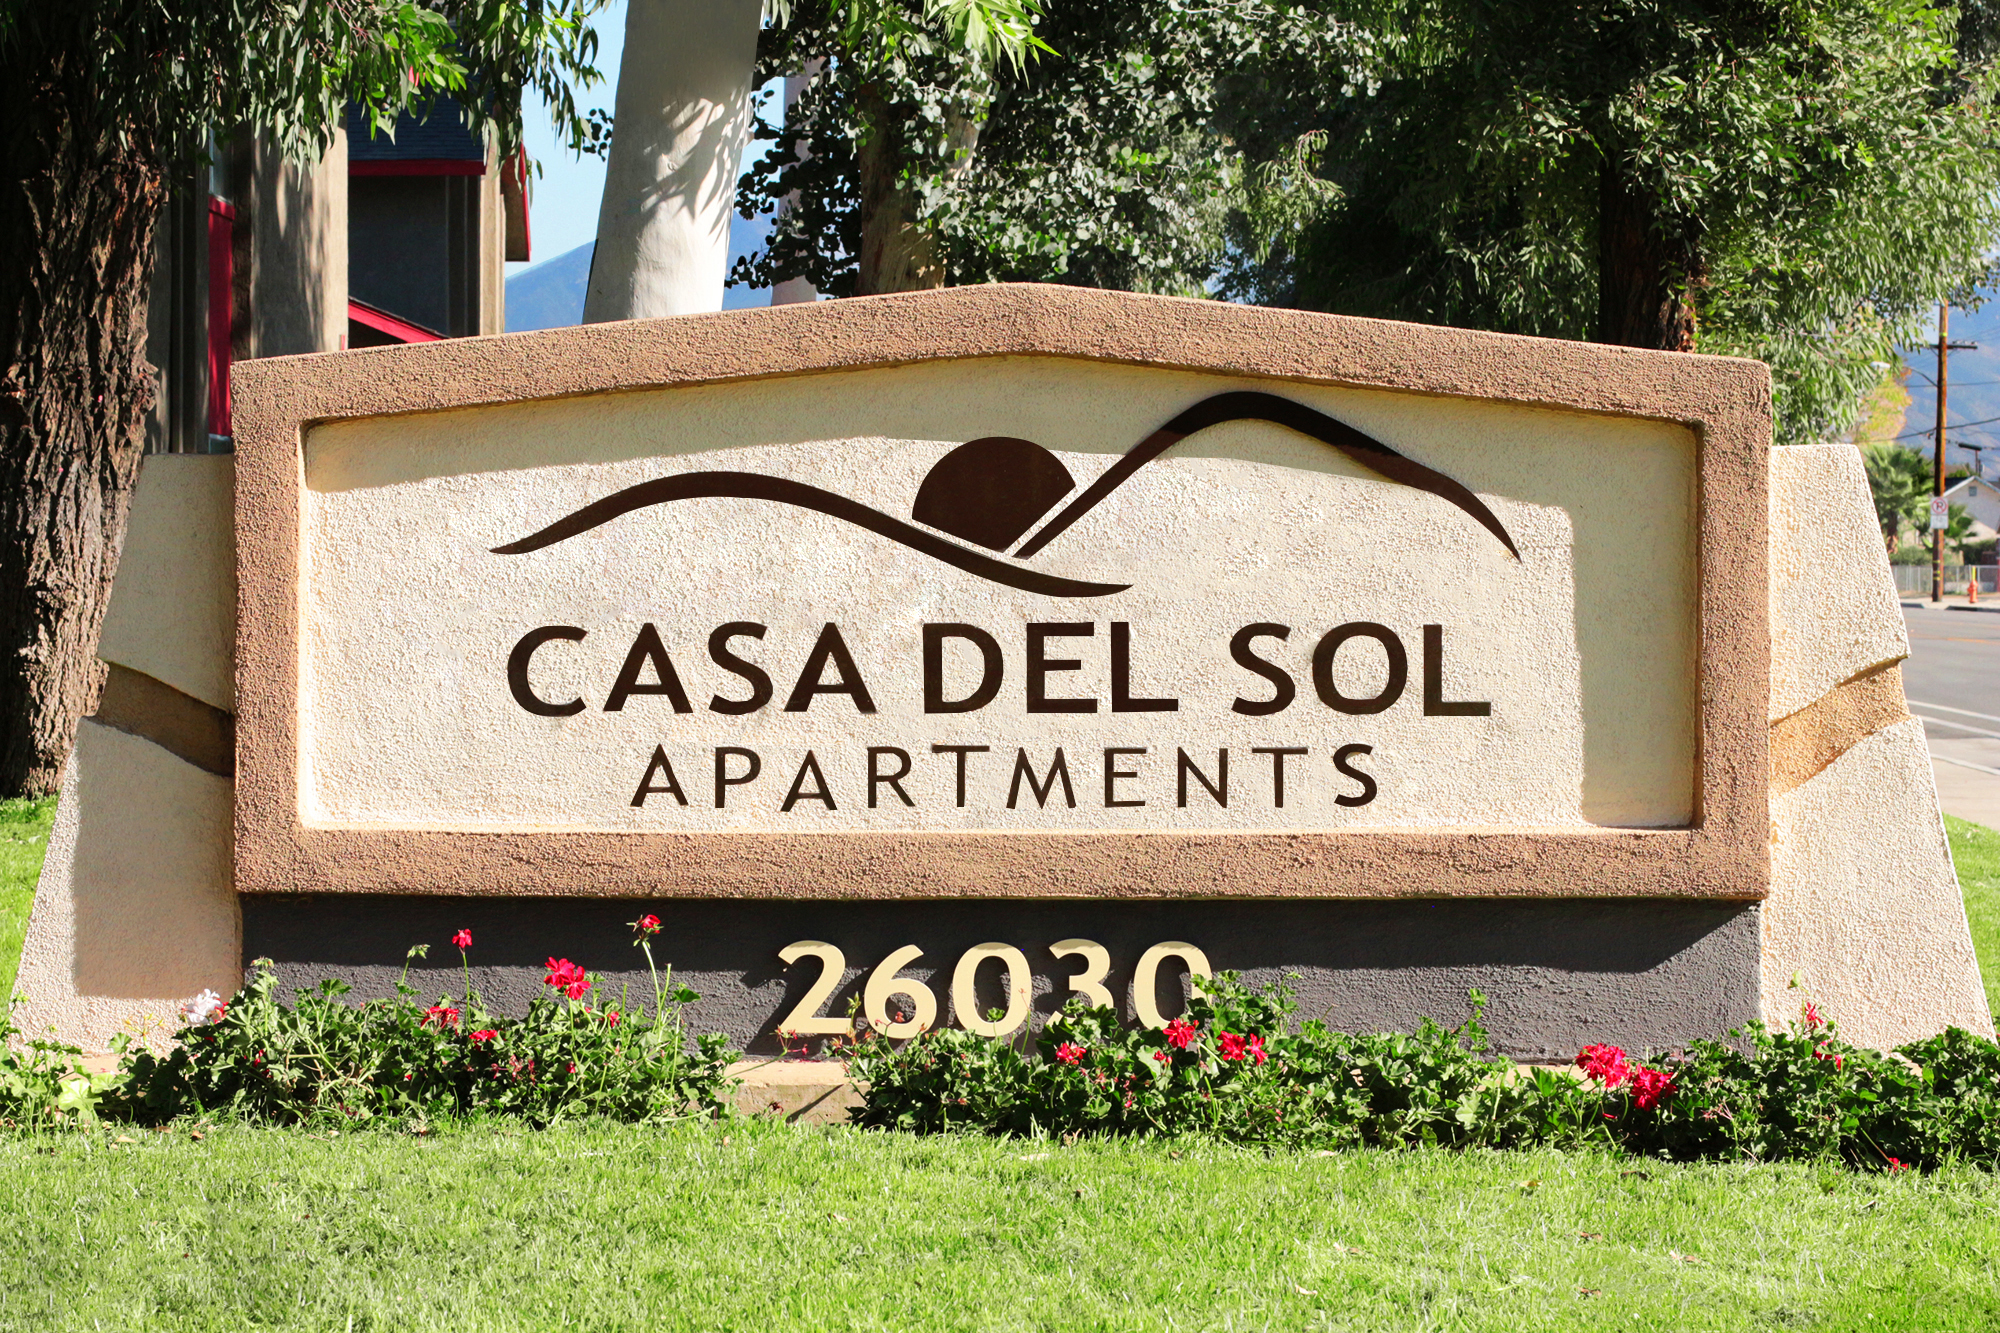 This image displays entrance marker photo of Casa Del Sol Apartments